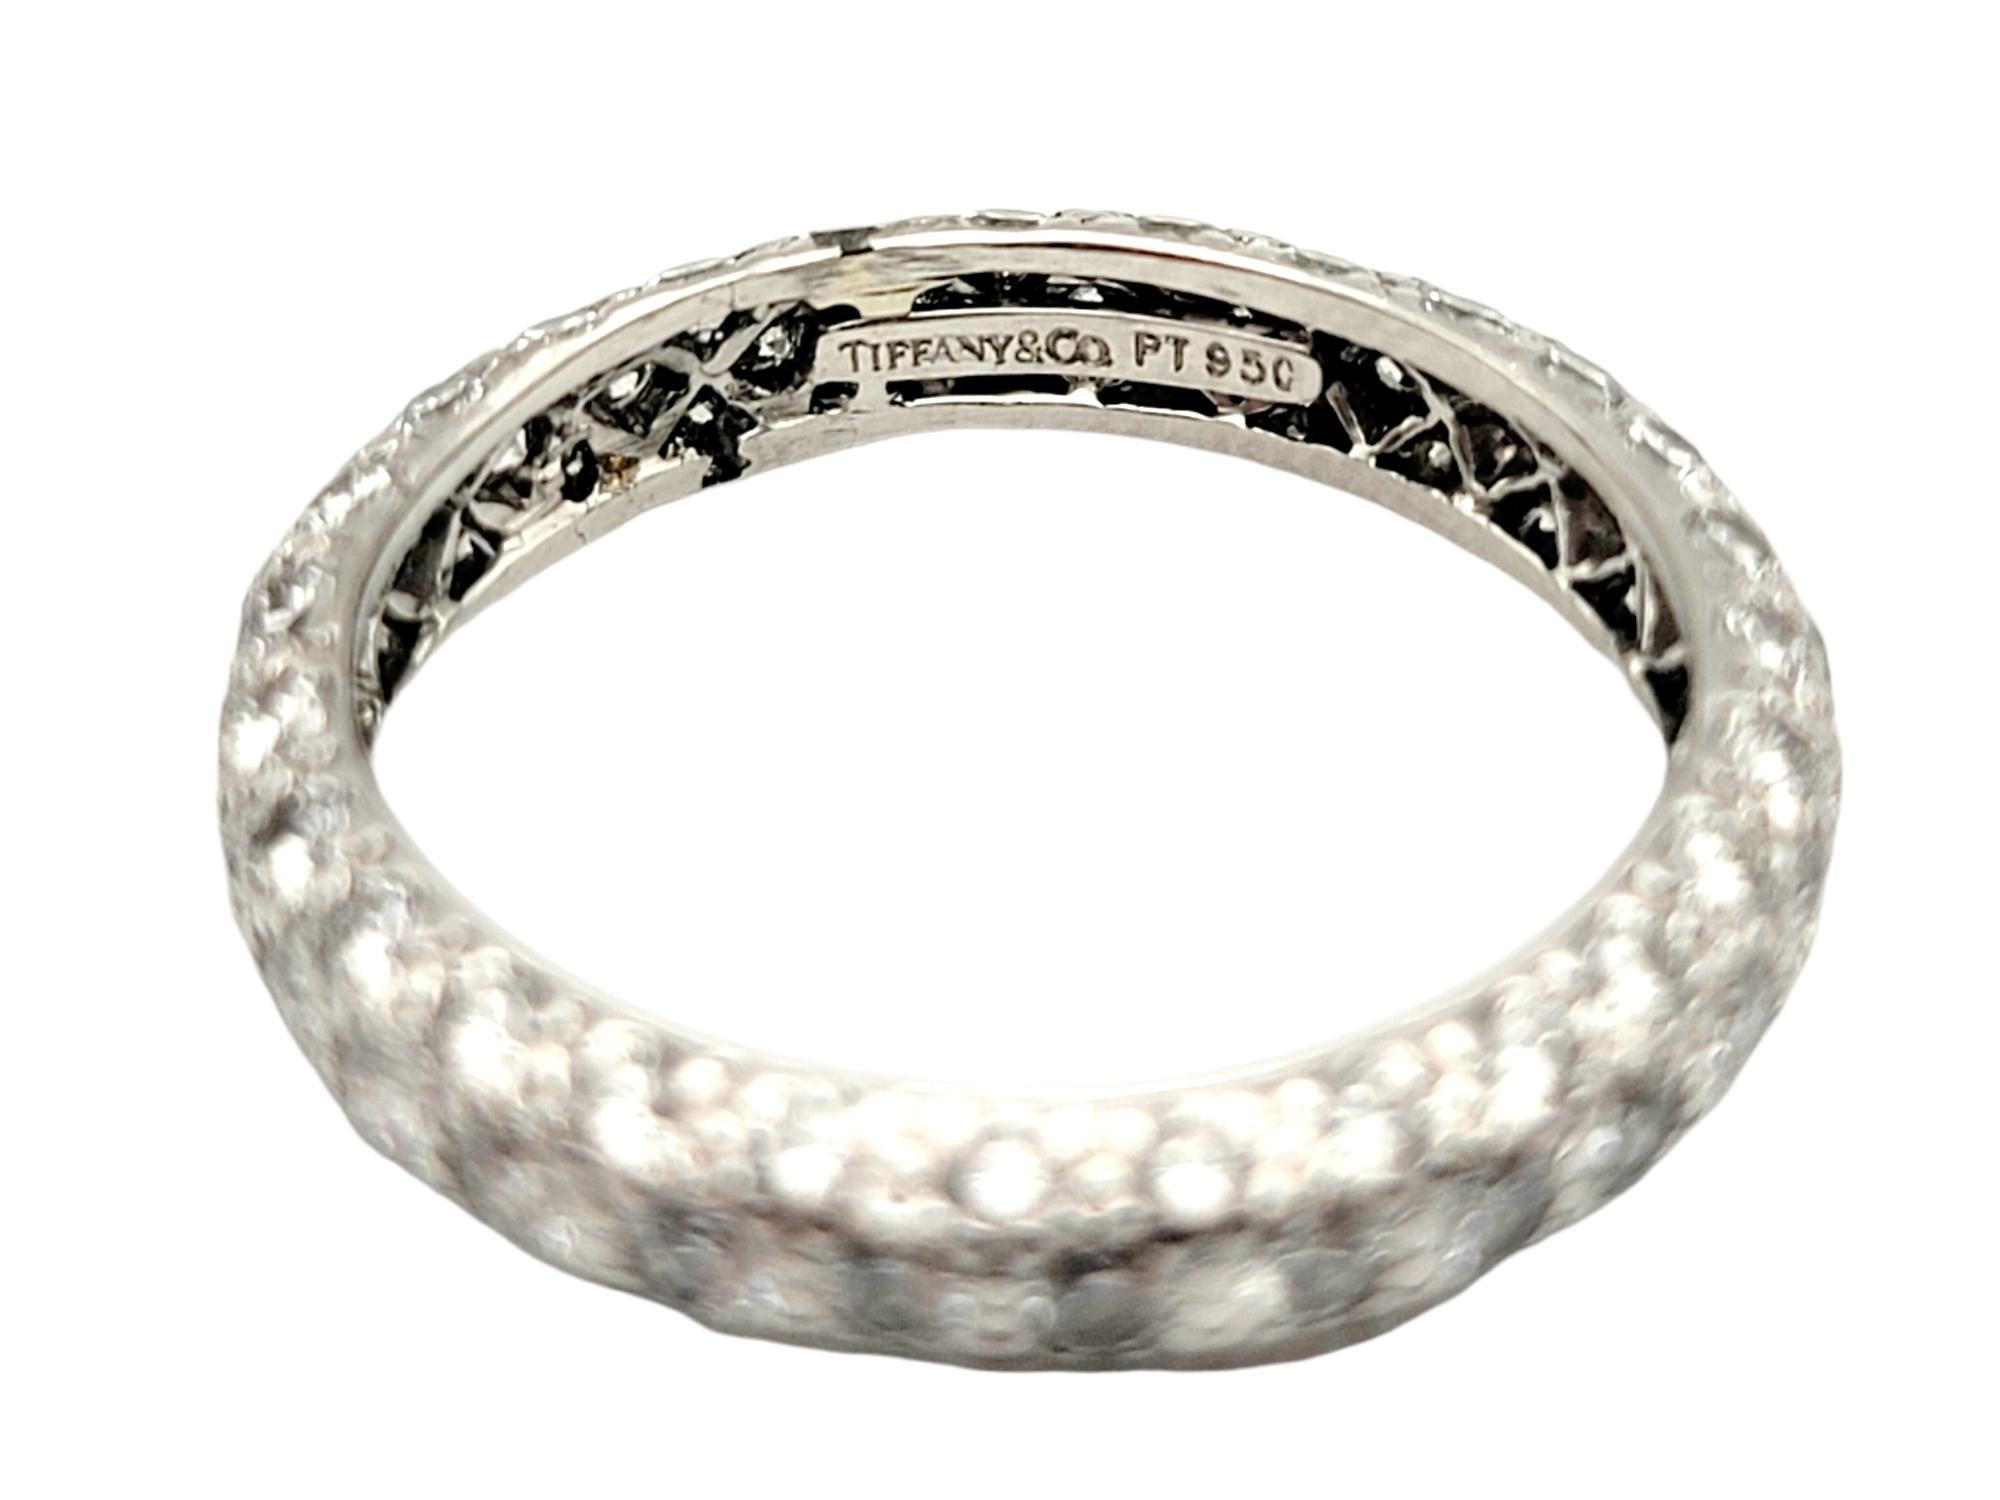 Tiffany & Co. Etoile Pave Diamond Eternity Band Ring Platinum 1.76 Carats Total 3